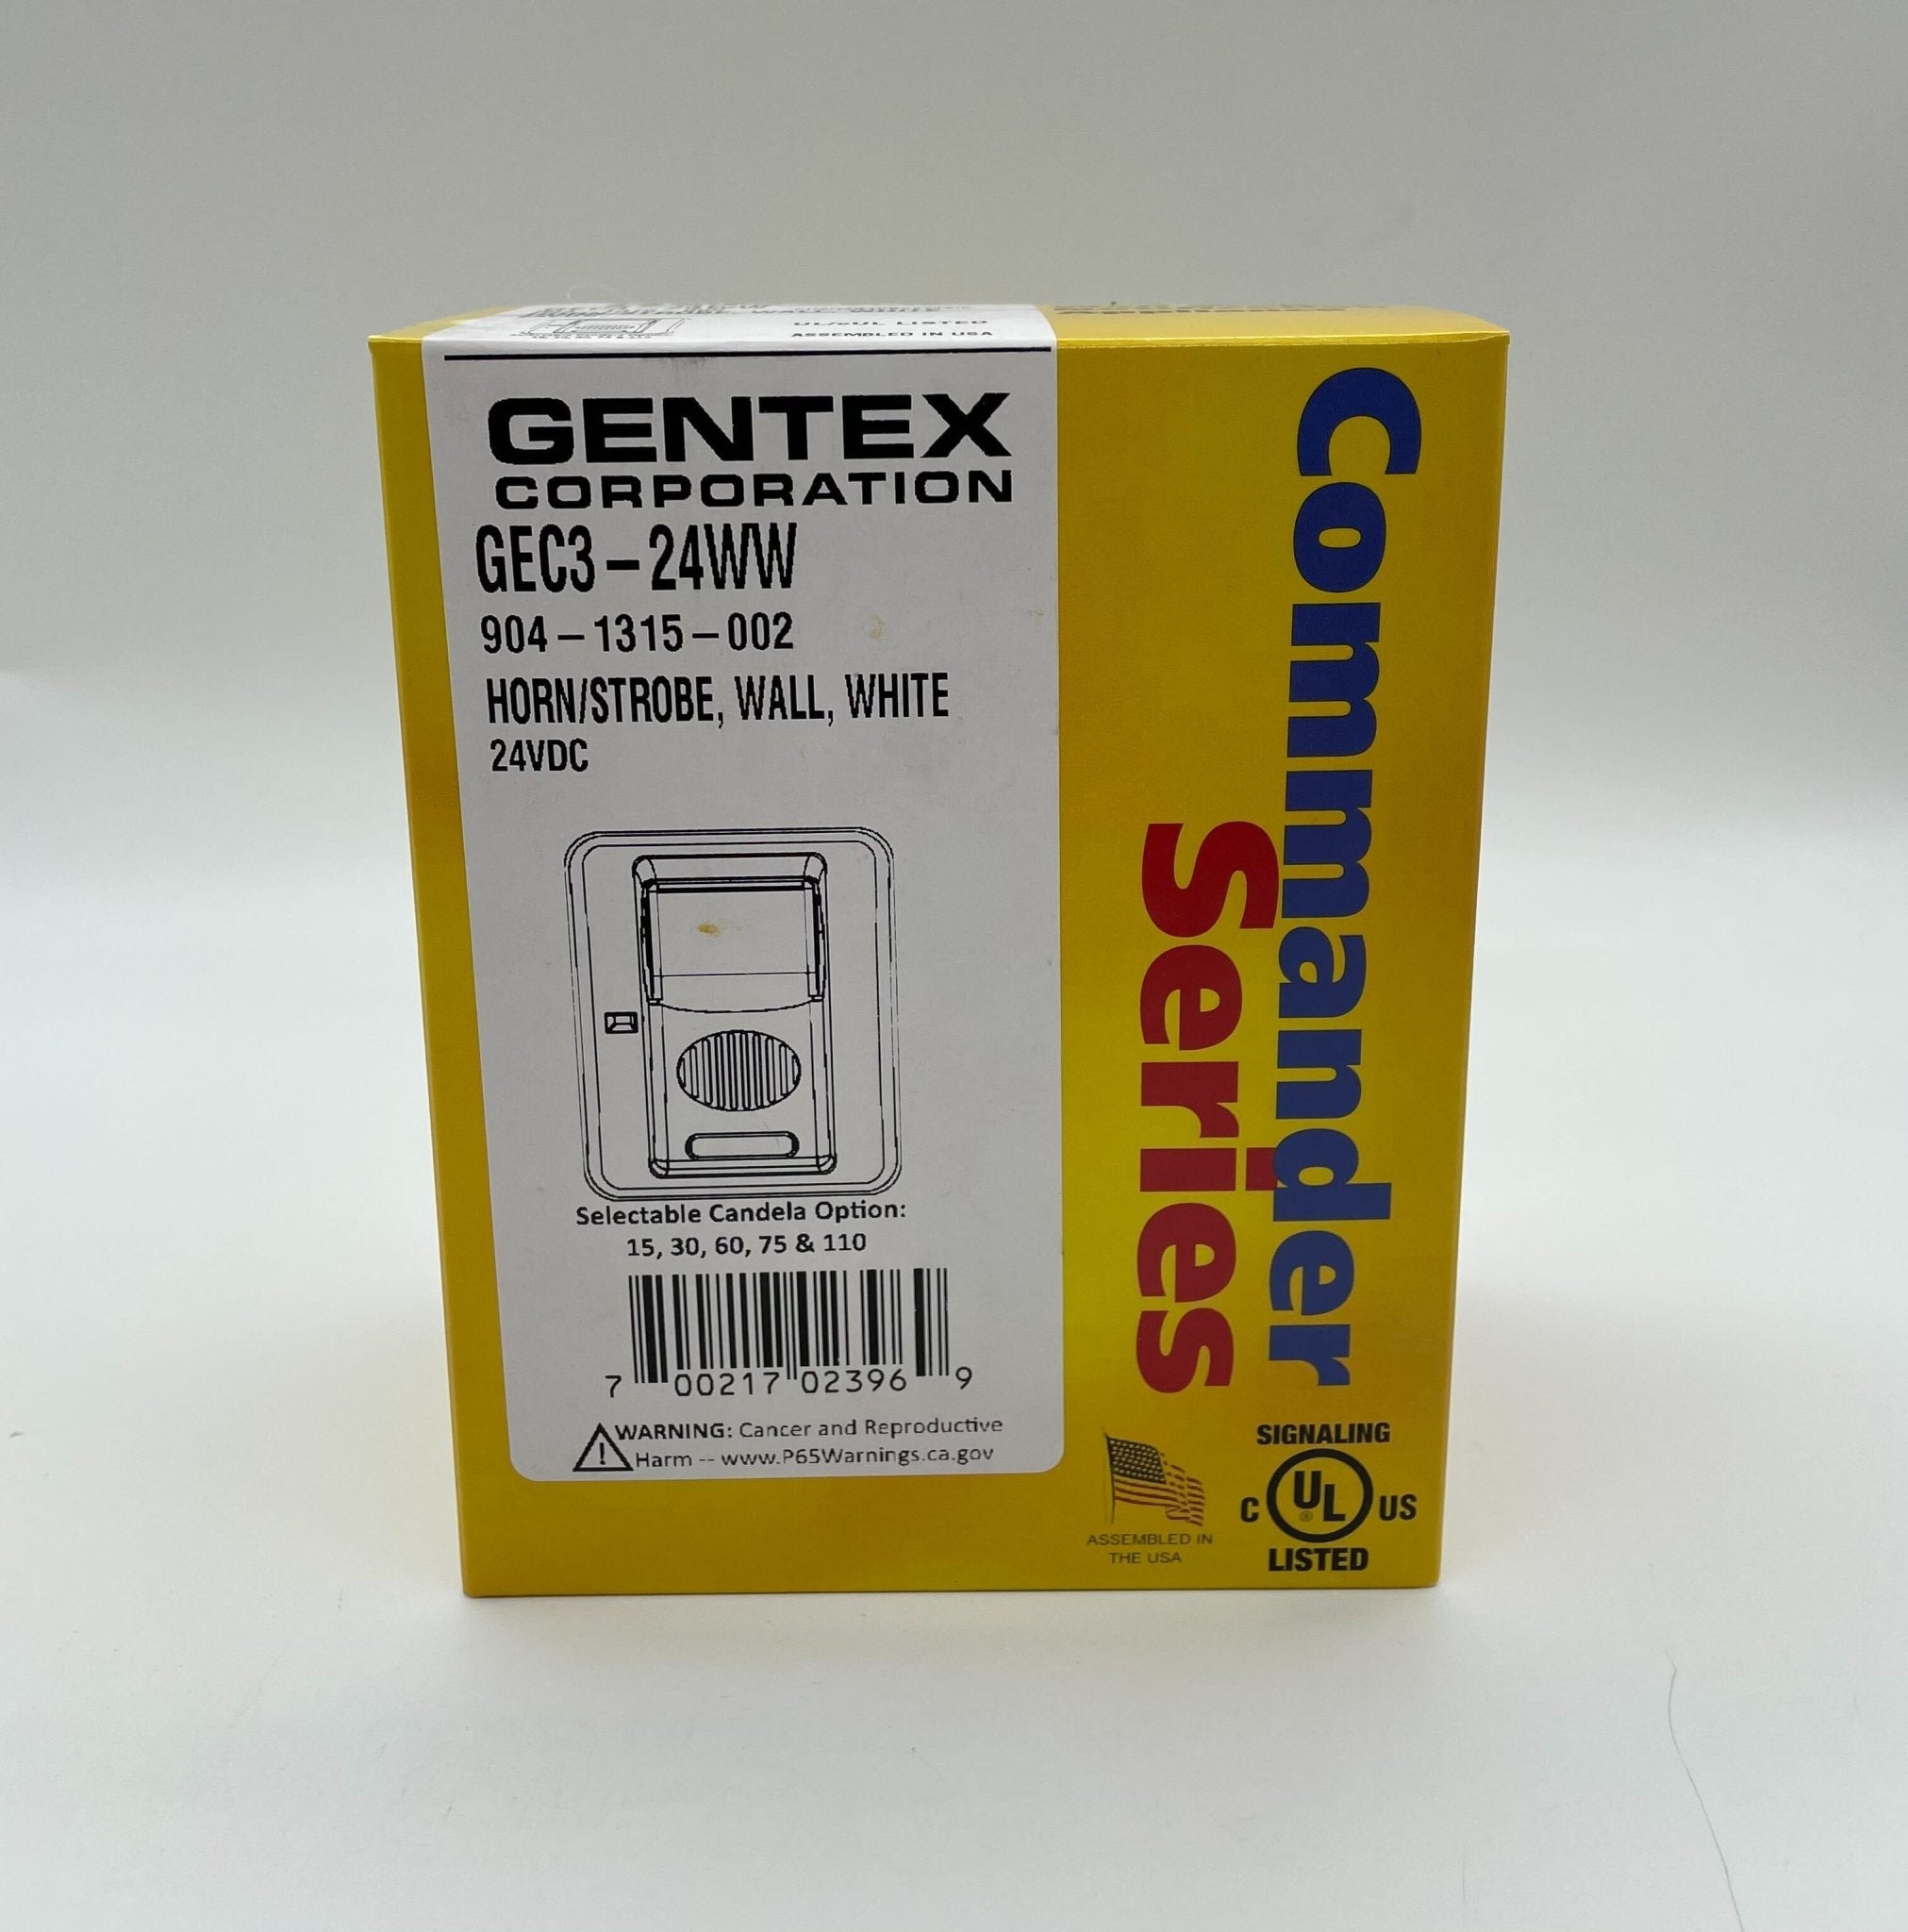 Gentex GEC3-24WW - The Fire Alarm Supplier